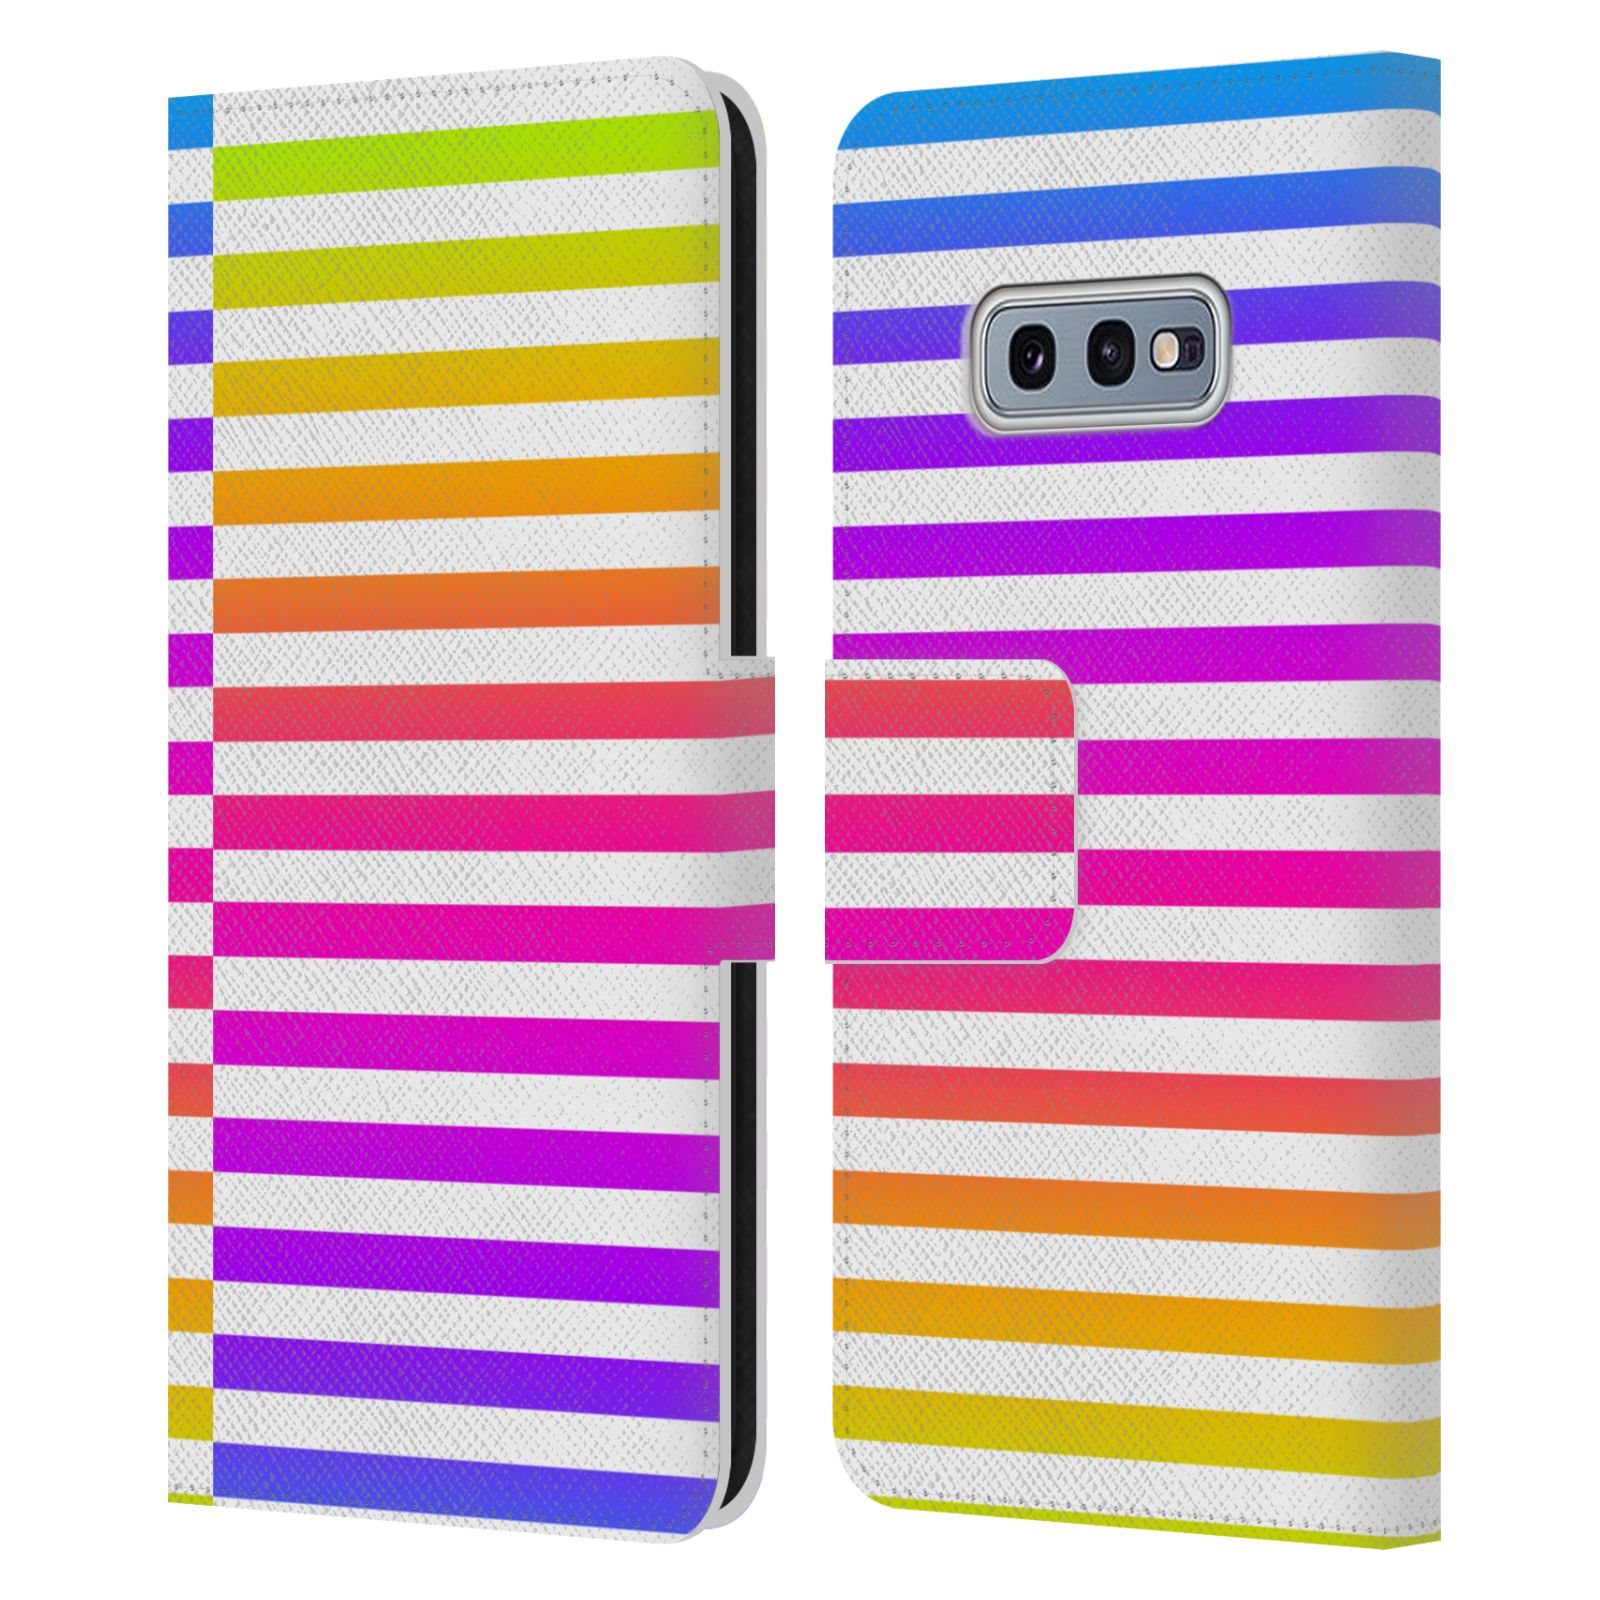 Pouzdro HEAD CASE na mobil Samsung Galaxy S10e dynamické pruhy barevné NEON